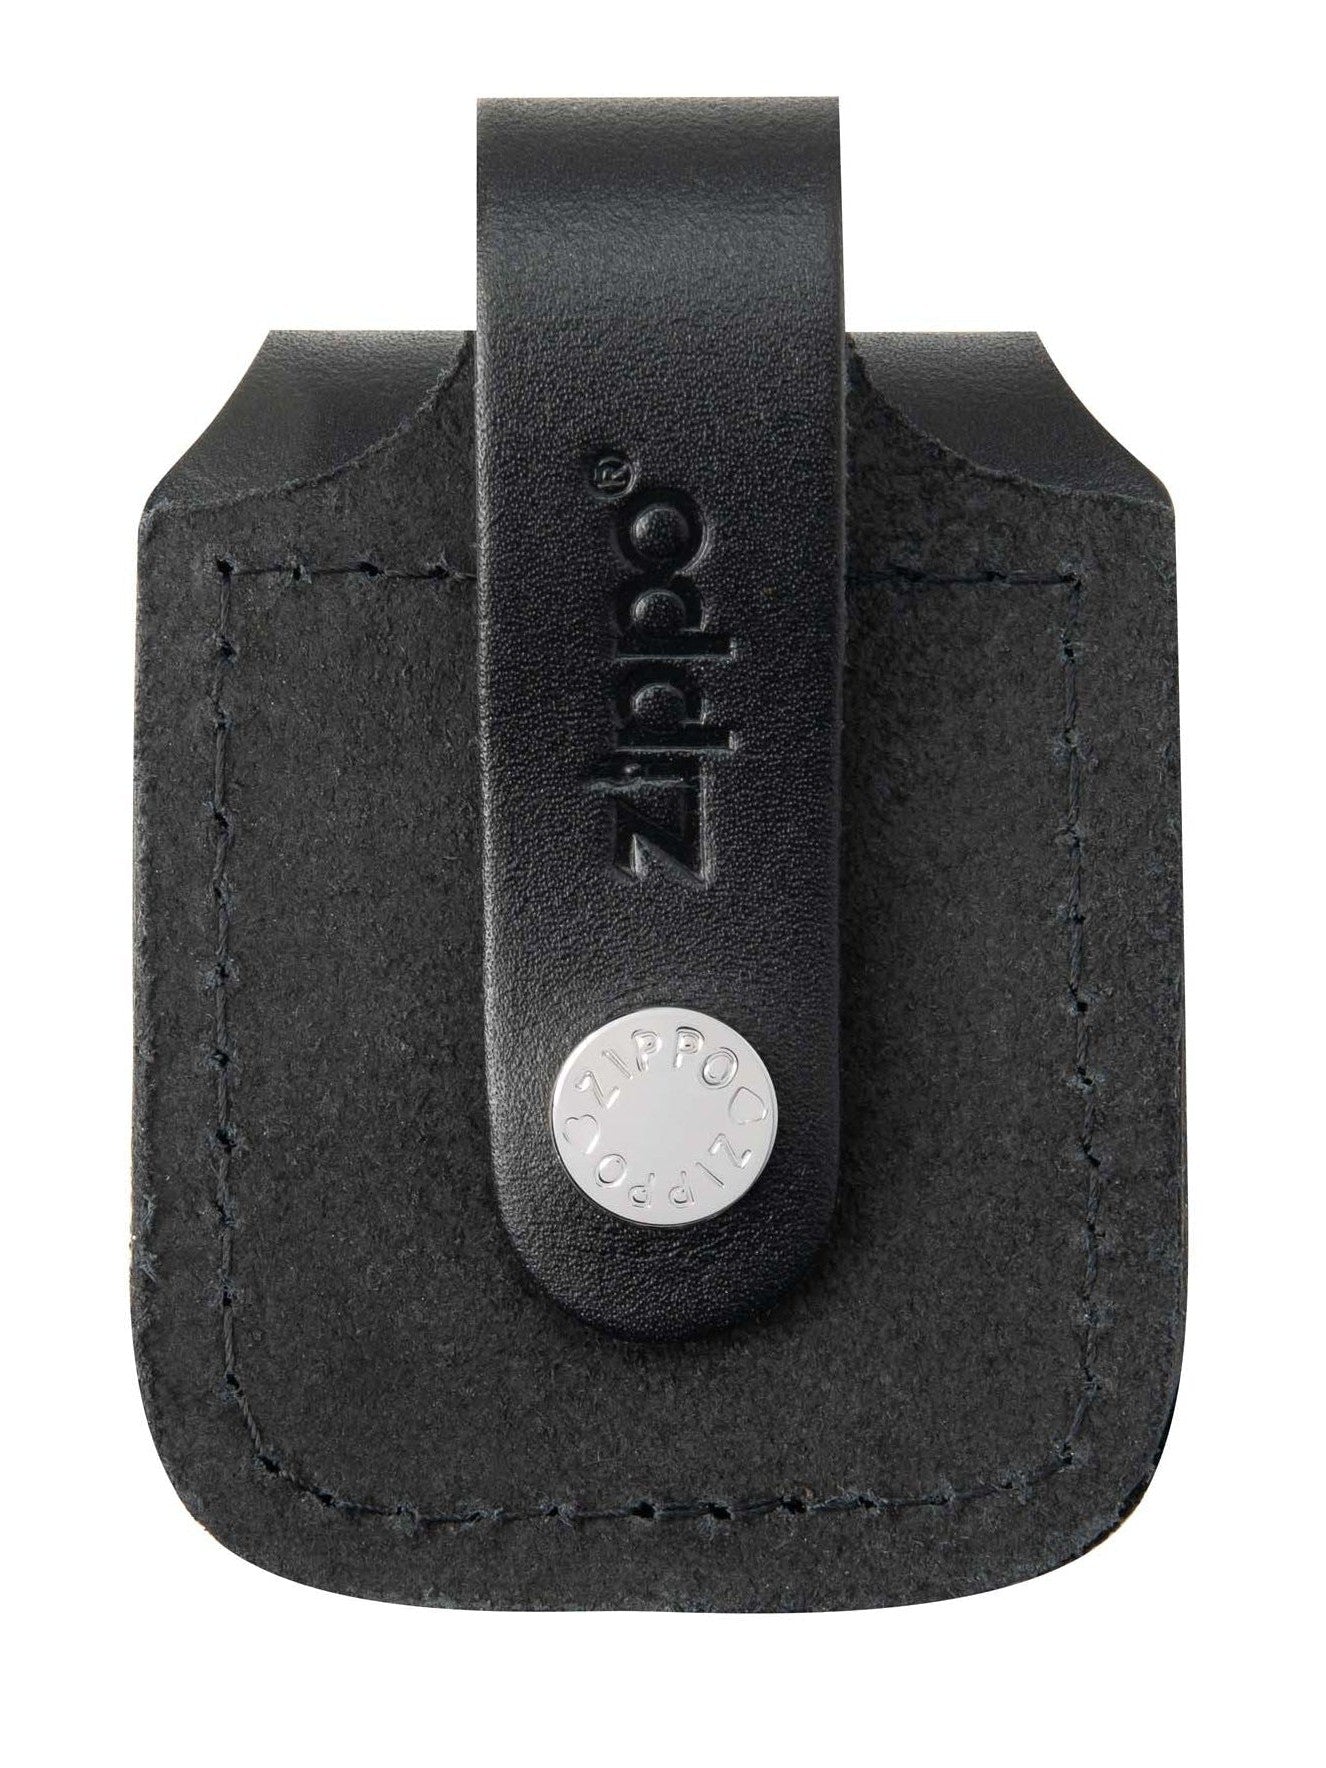 Zippo Jack Daniel's Lighter and Pouch Gift Set - Black Matte 48460